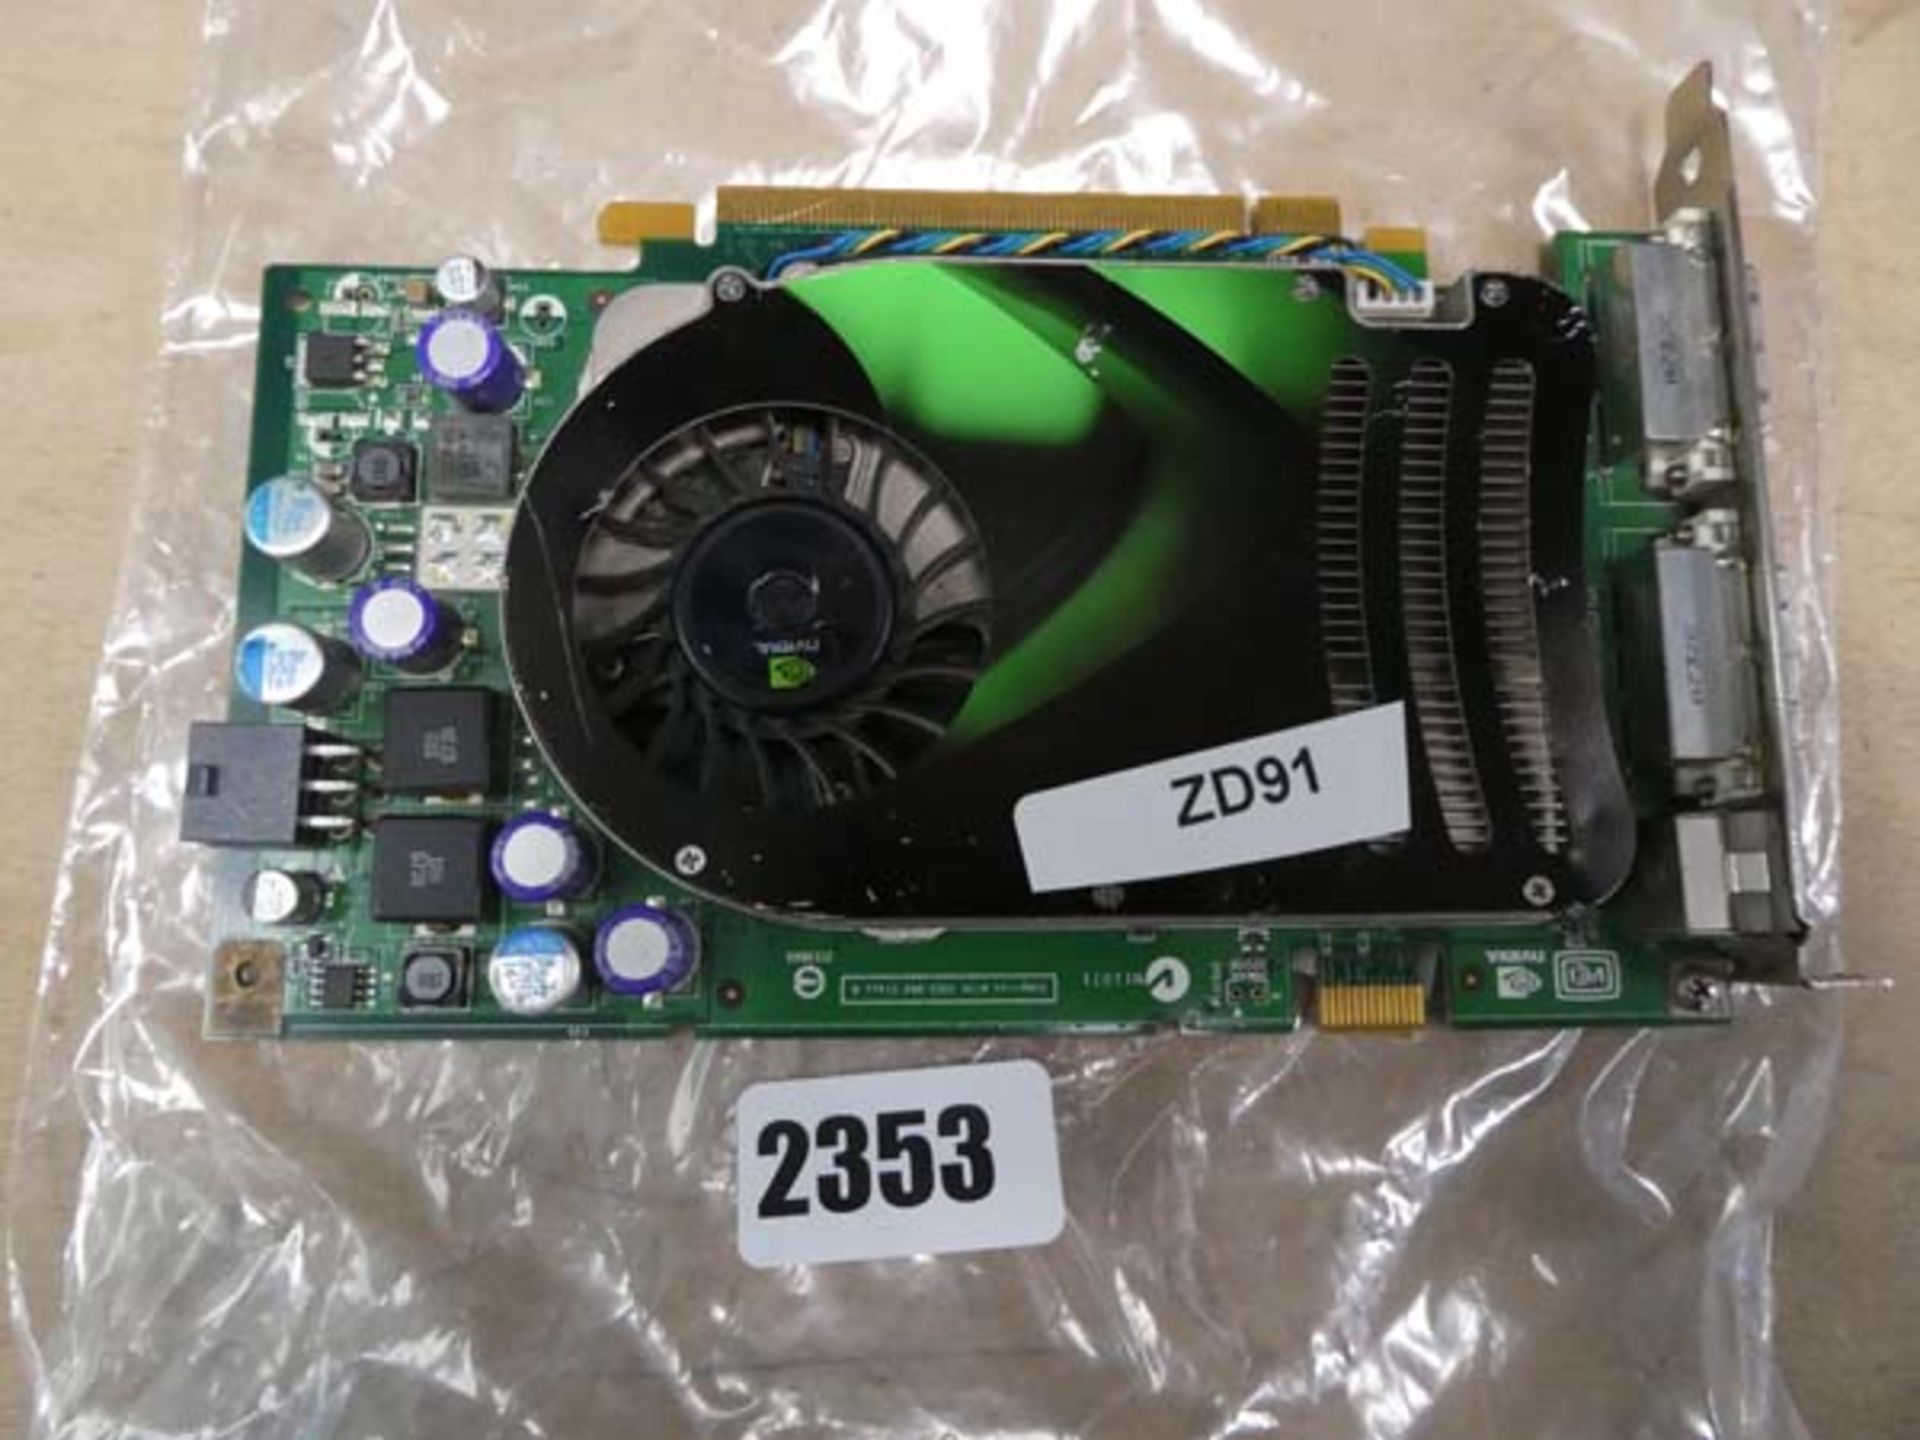 Geforce 8800 GTS graphics card